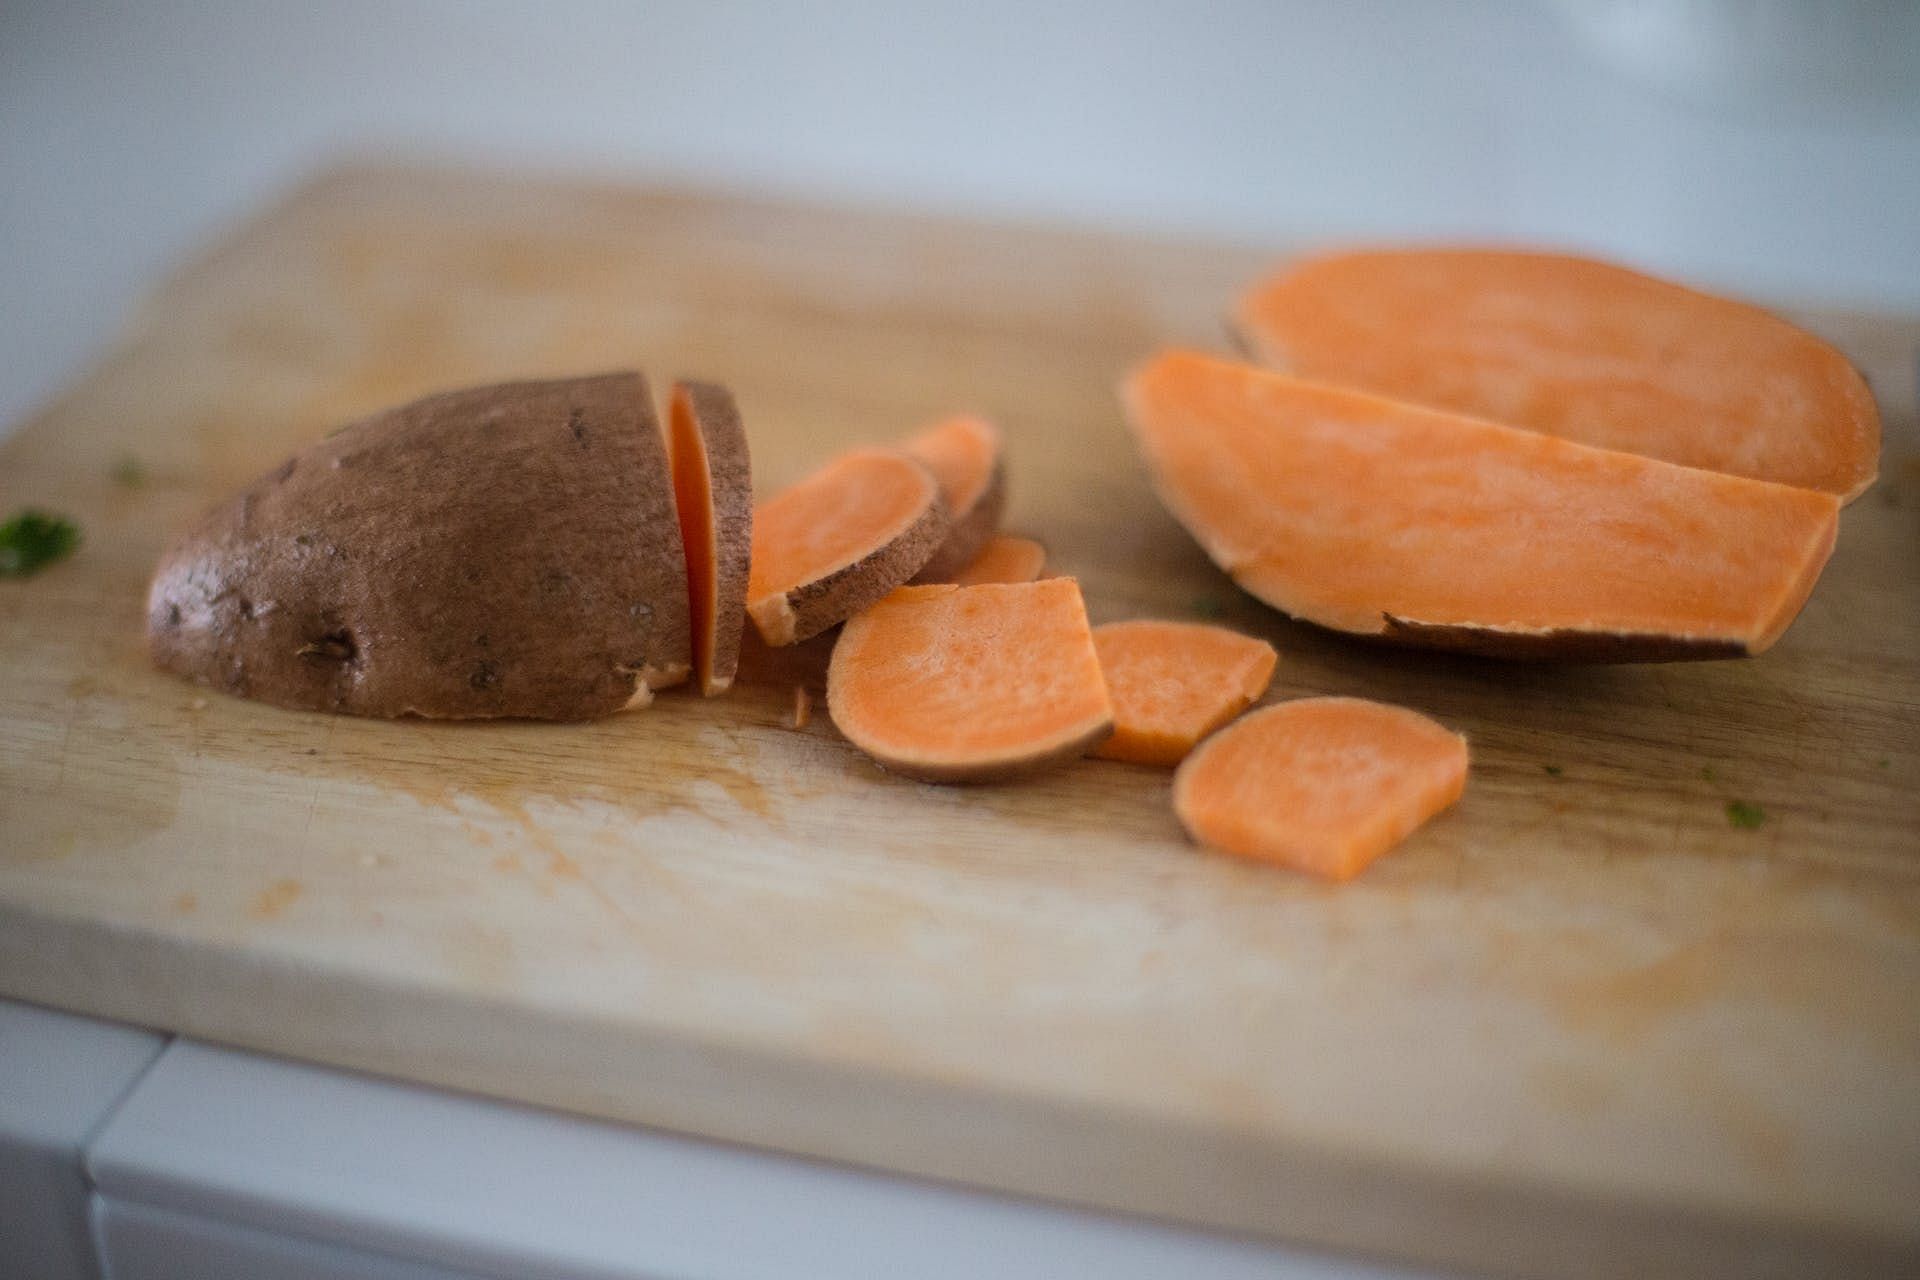 Sweet potato keeps emotional eating at bay. (Image via Pexels/Ela Haney)